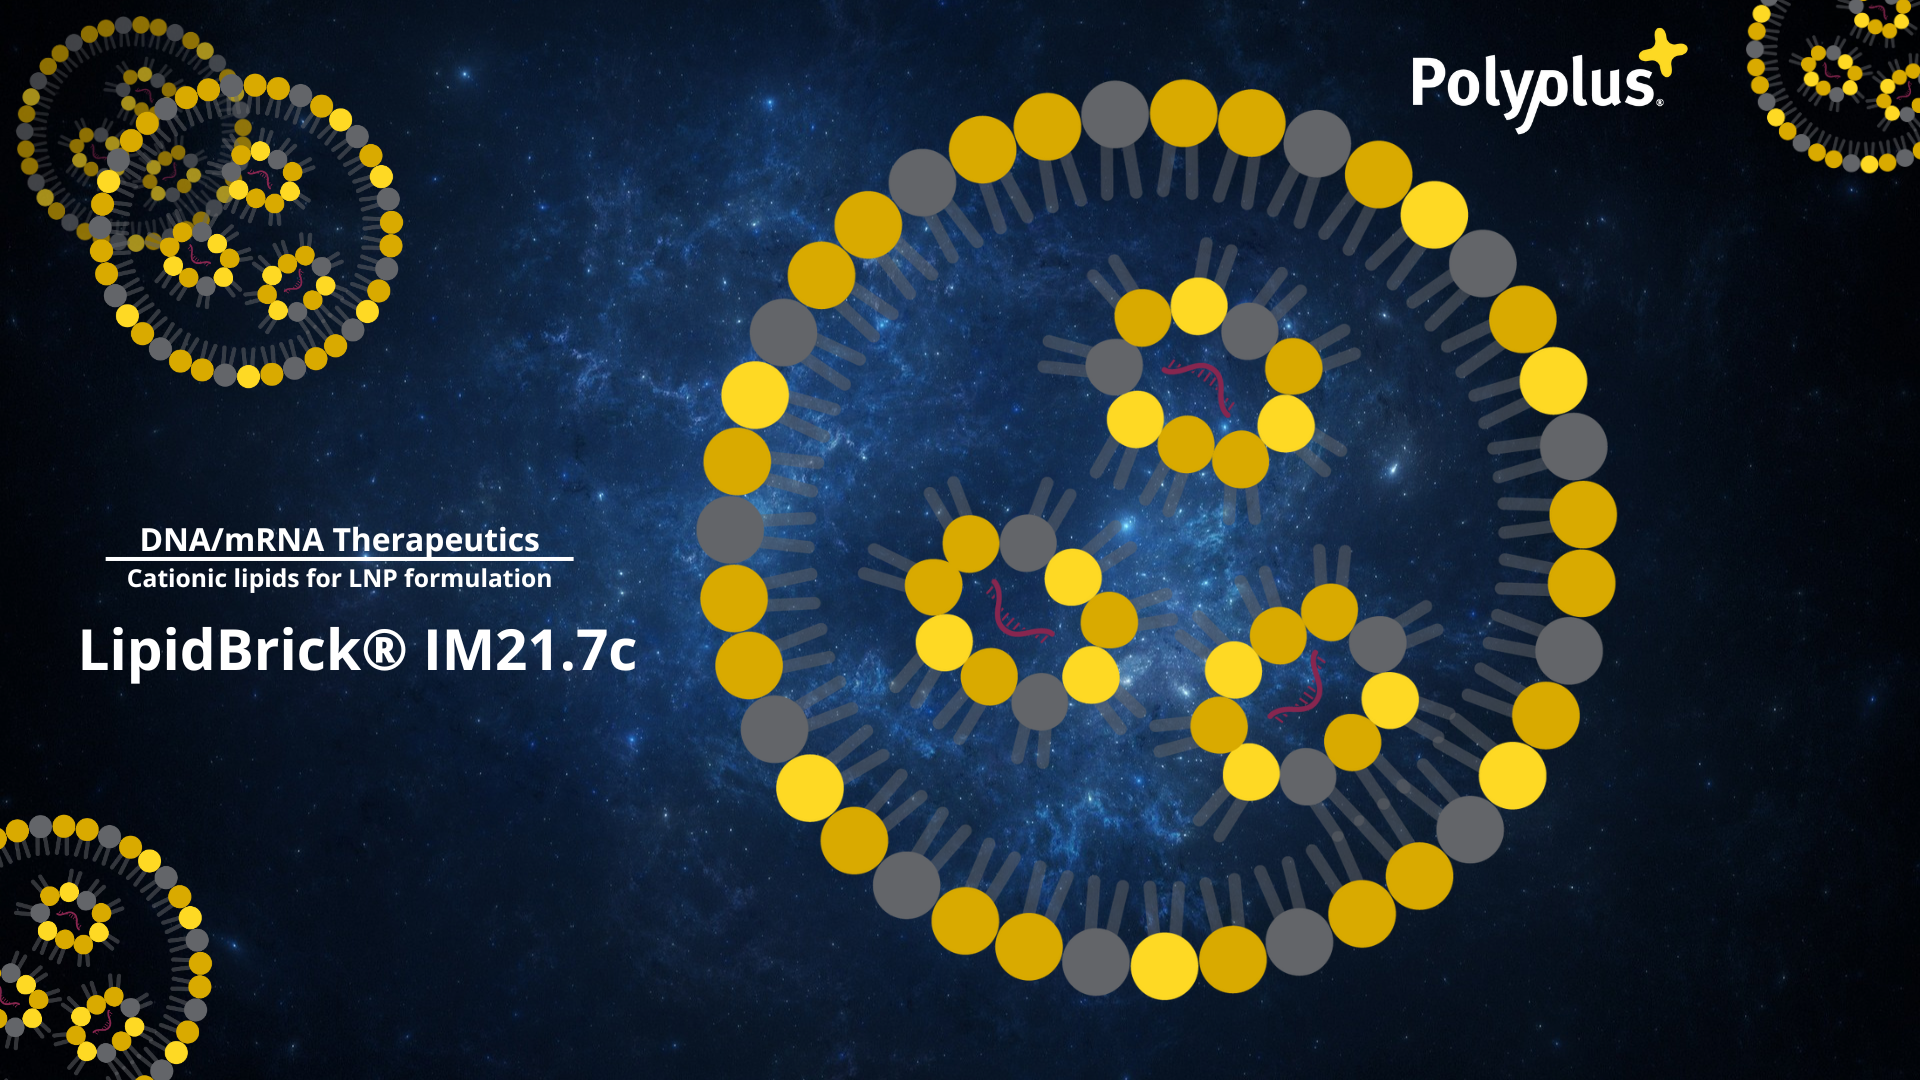 Polyplus Introduces LipidBrick® for LNP Formulation in mRNA Therapeutics